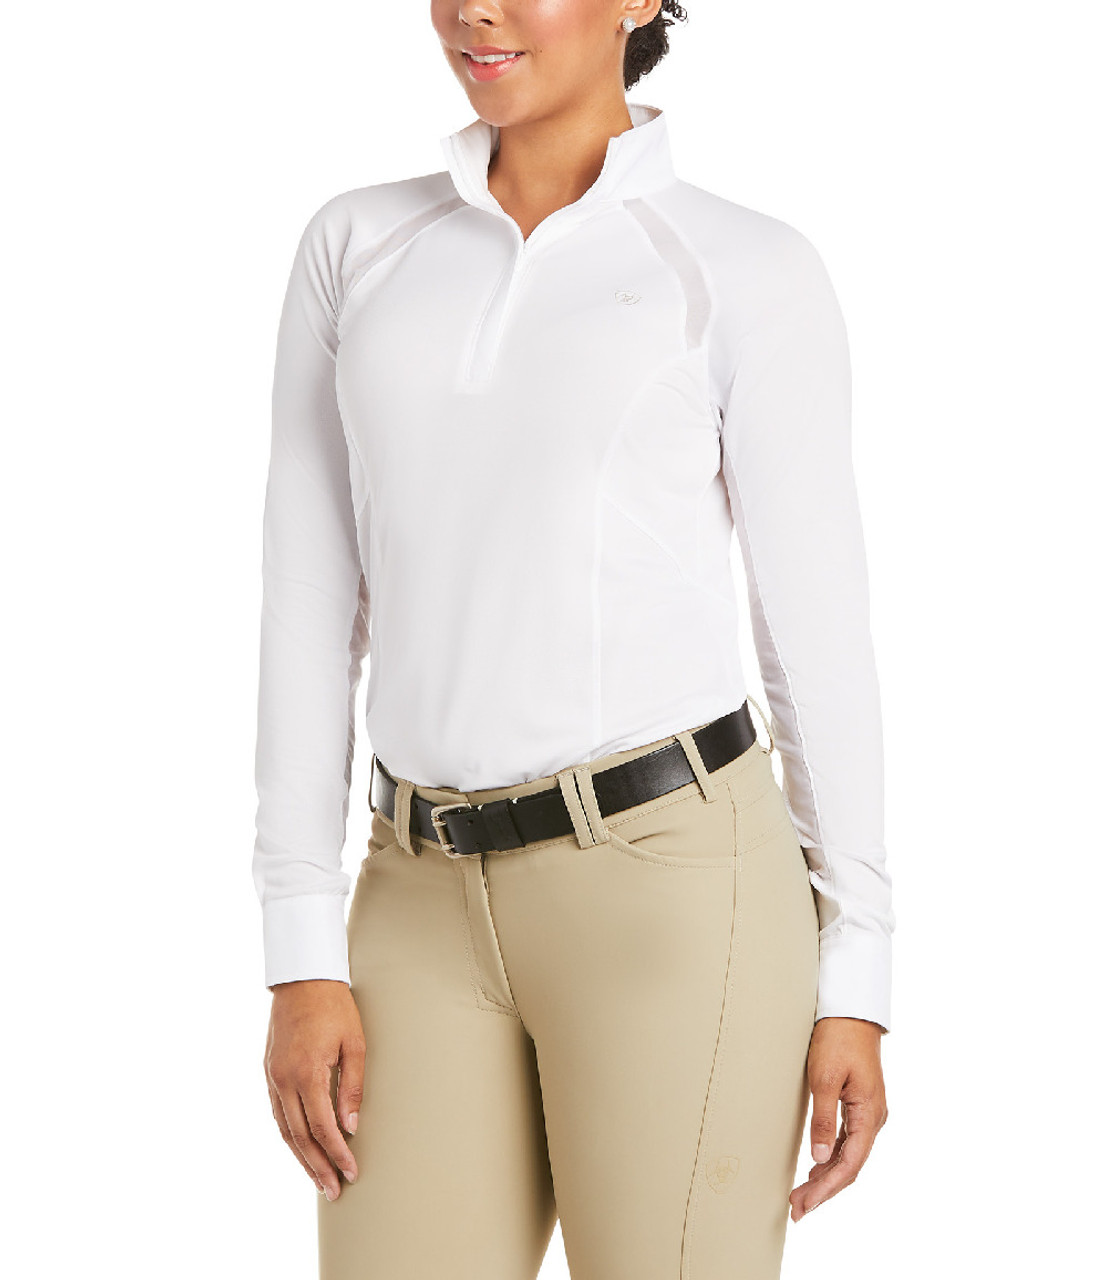 Ariat Sunstopper Ladies Long Sleeve Quarter Zip Top White 